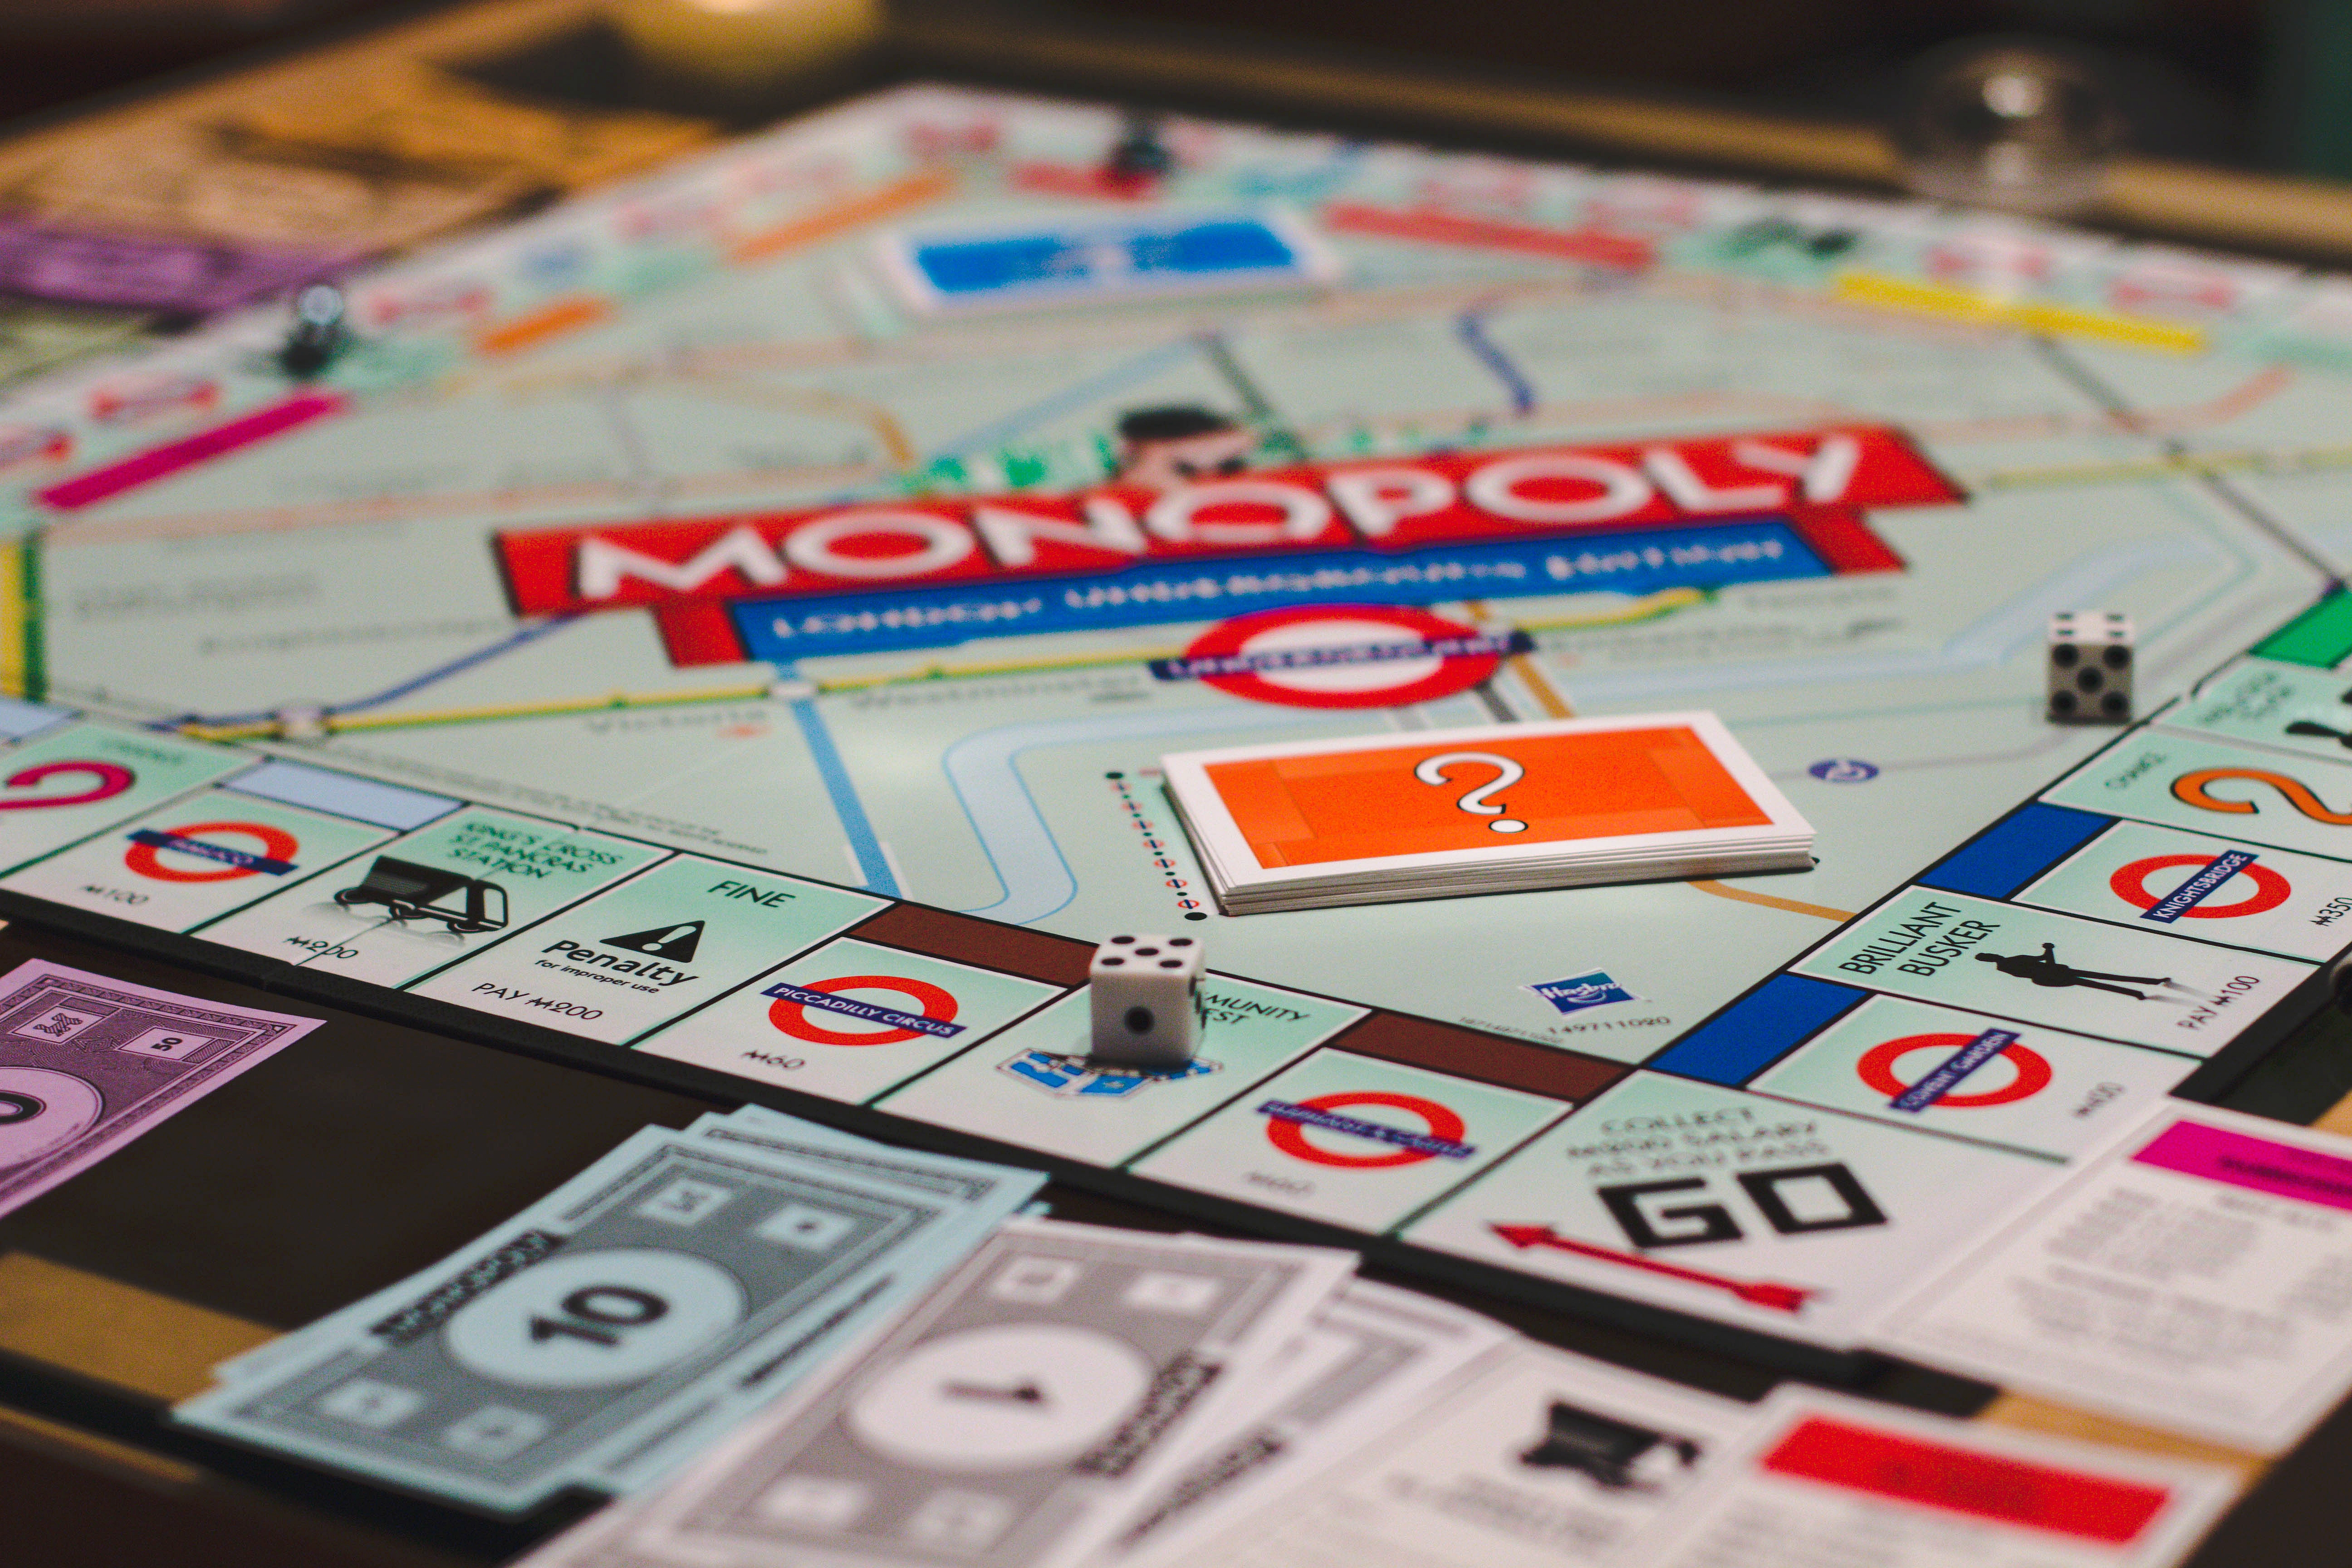 best monopoly pc